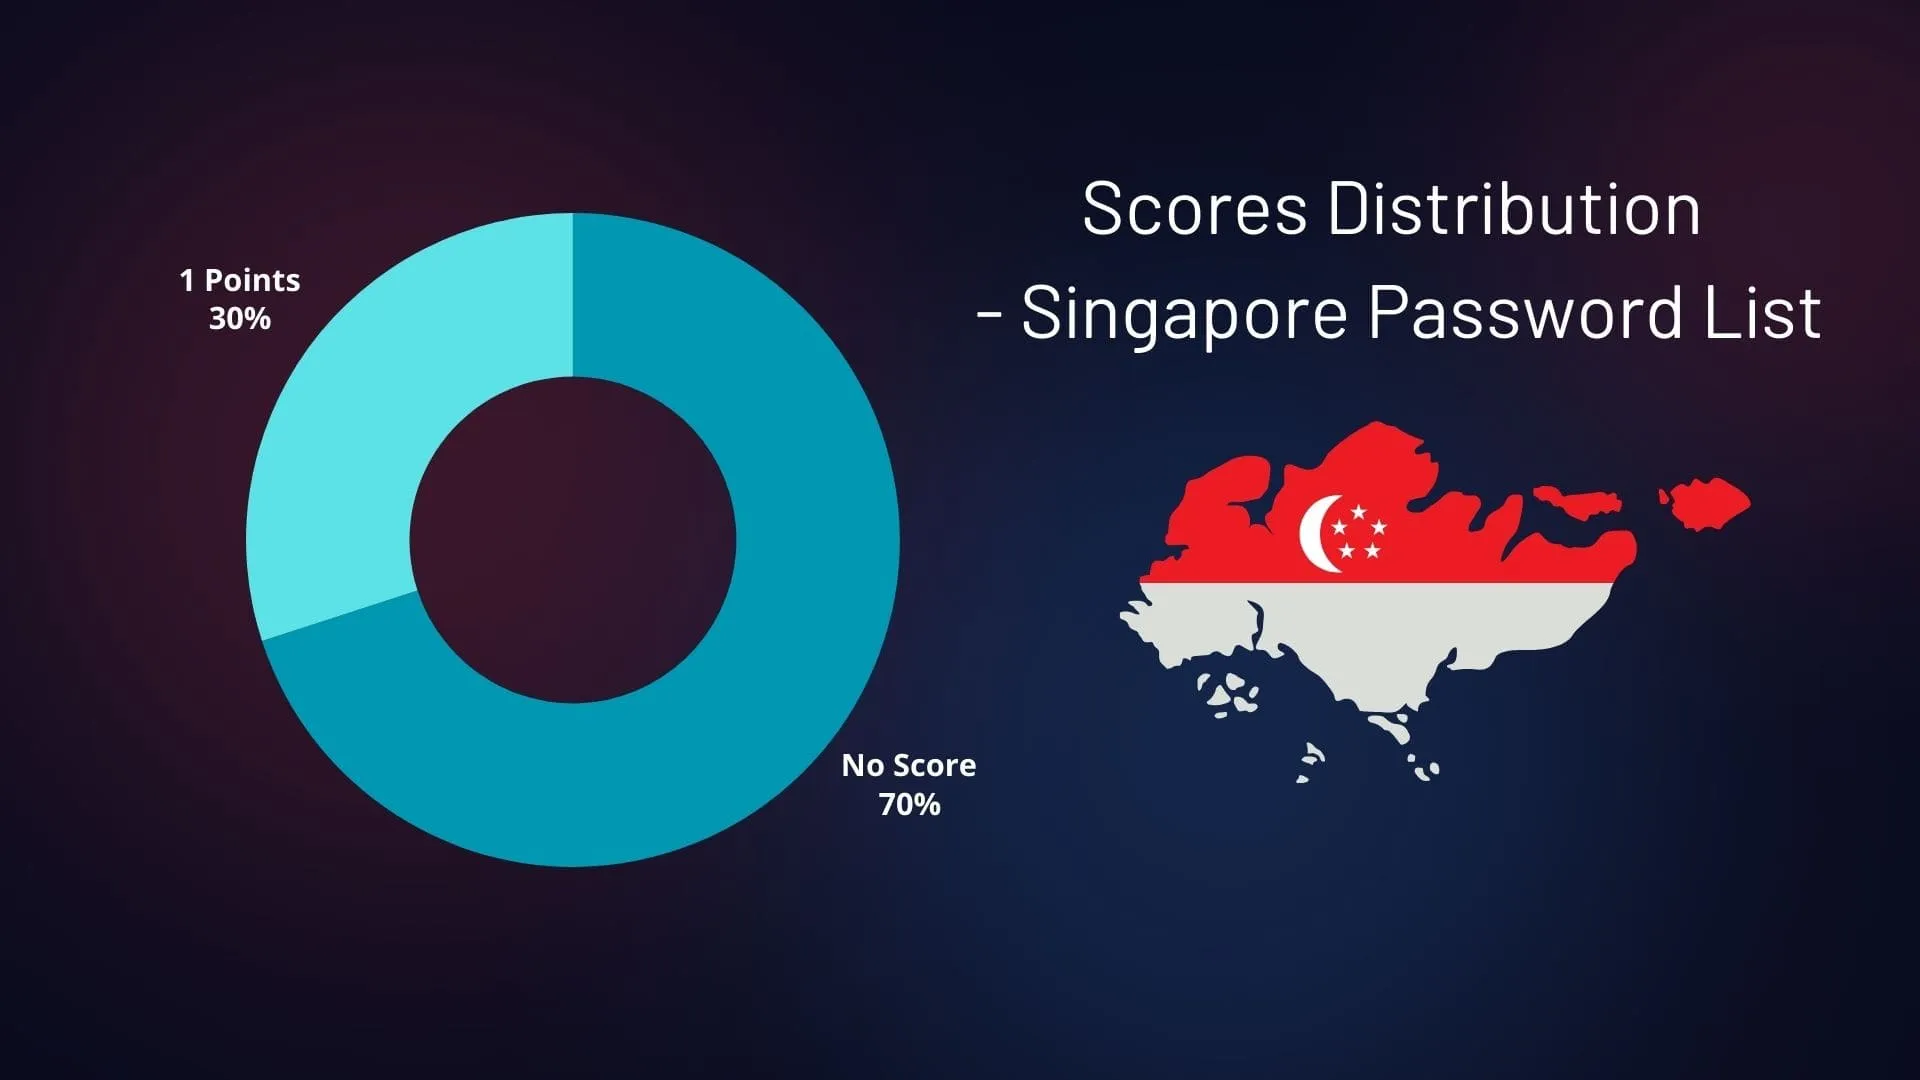 Distribution of the Scores – Singapore Password List